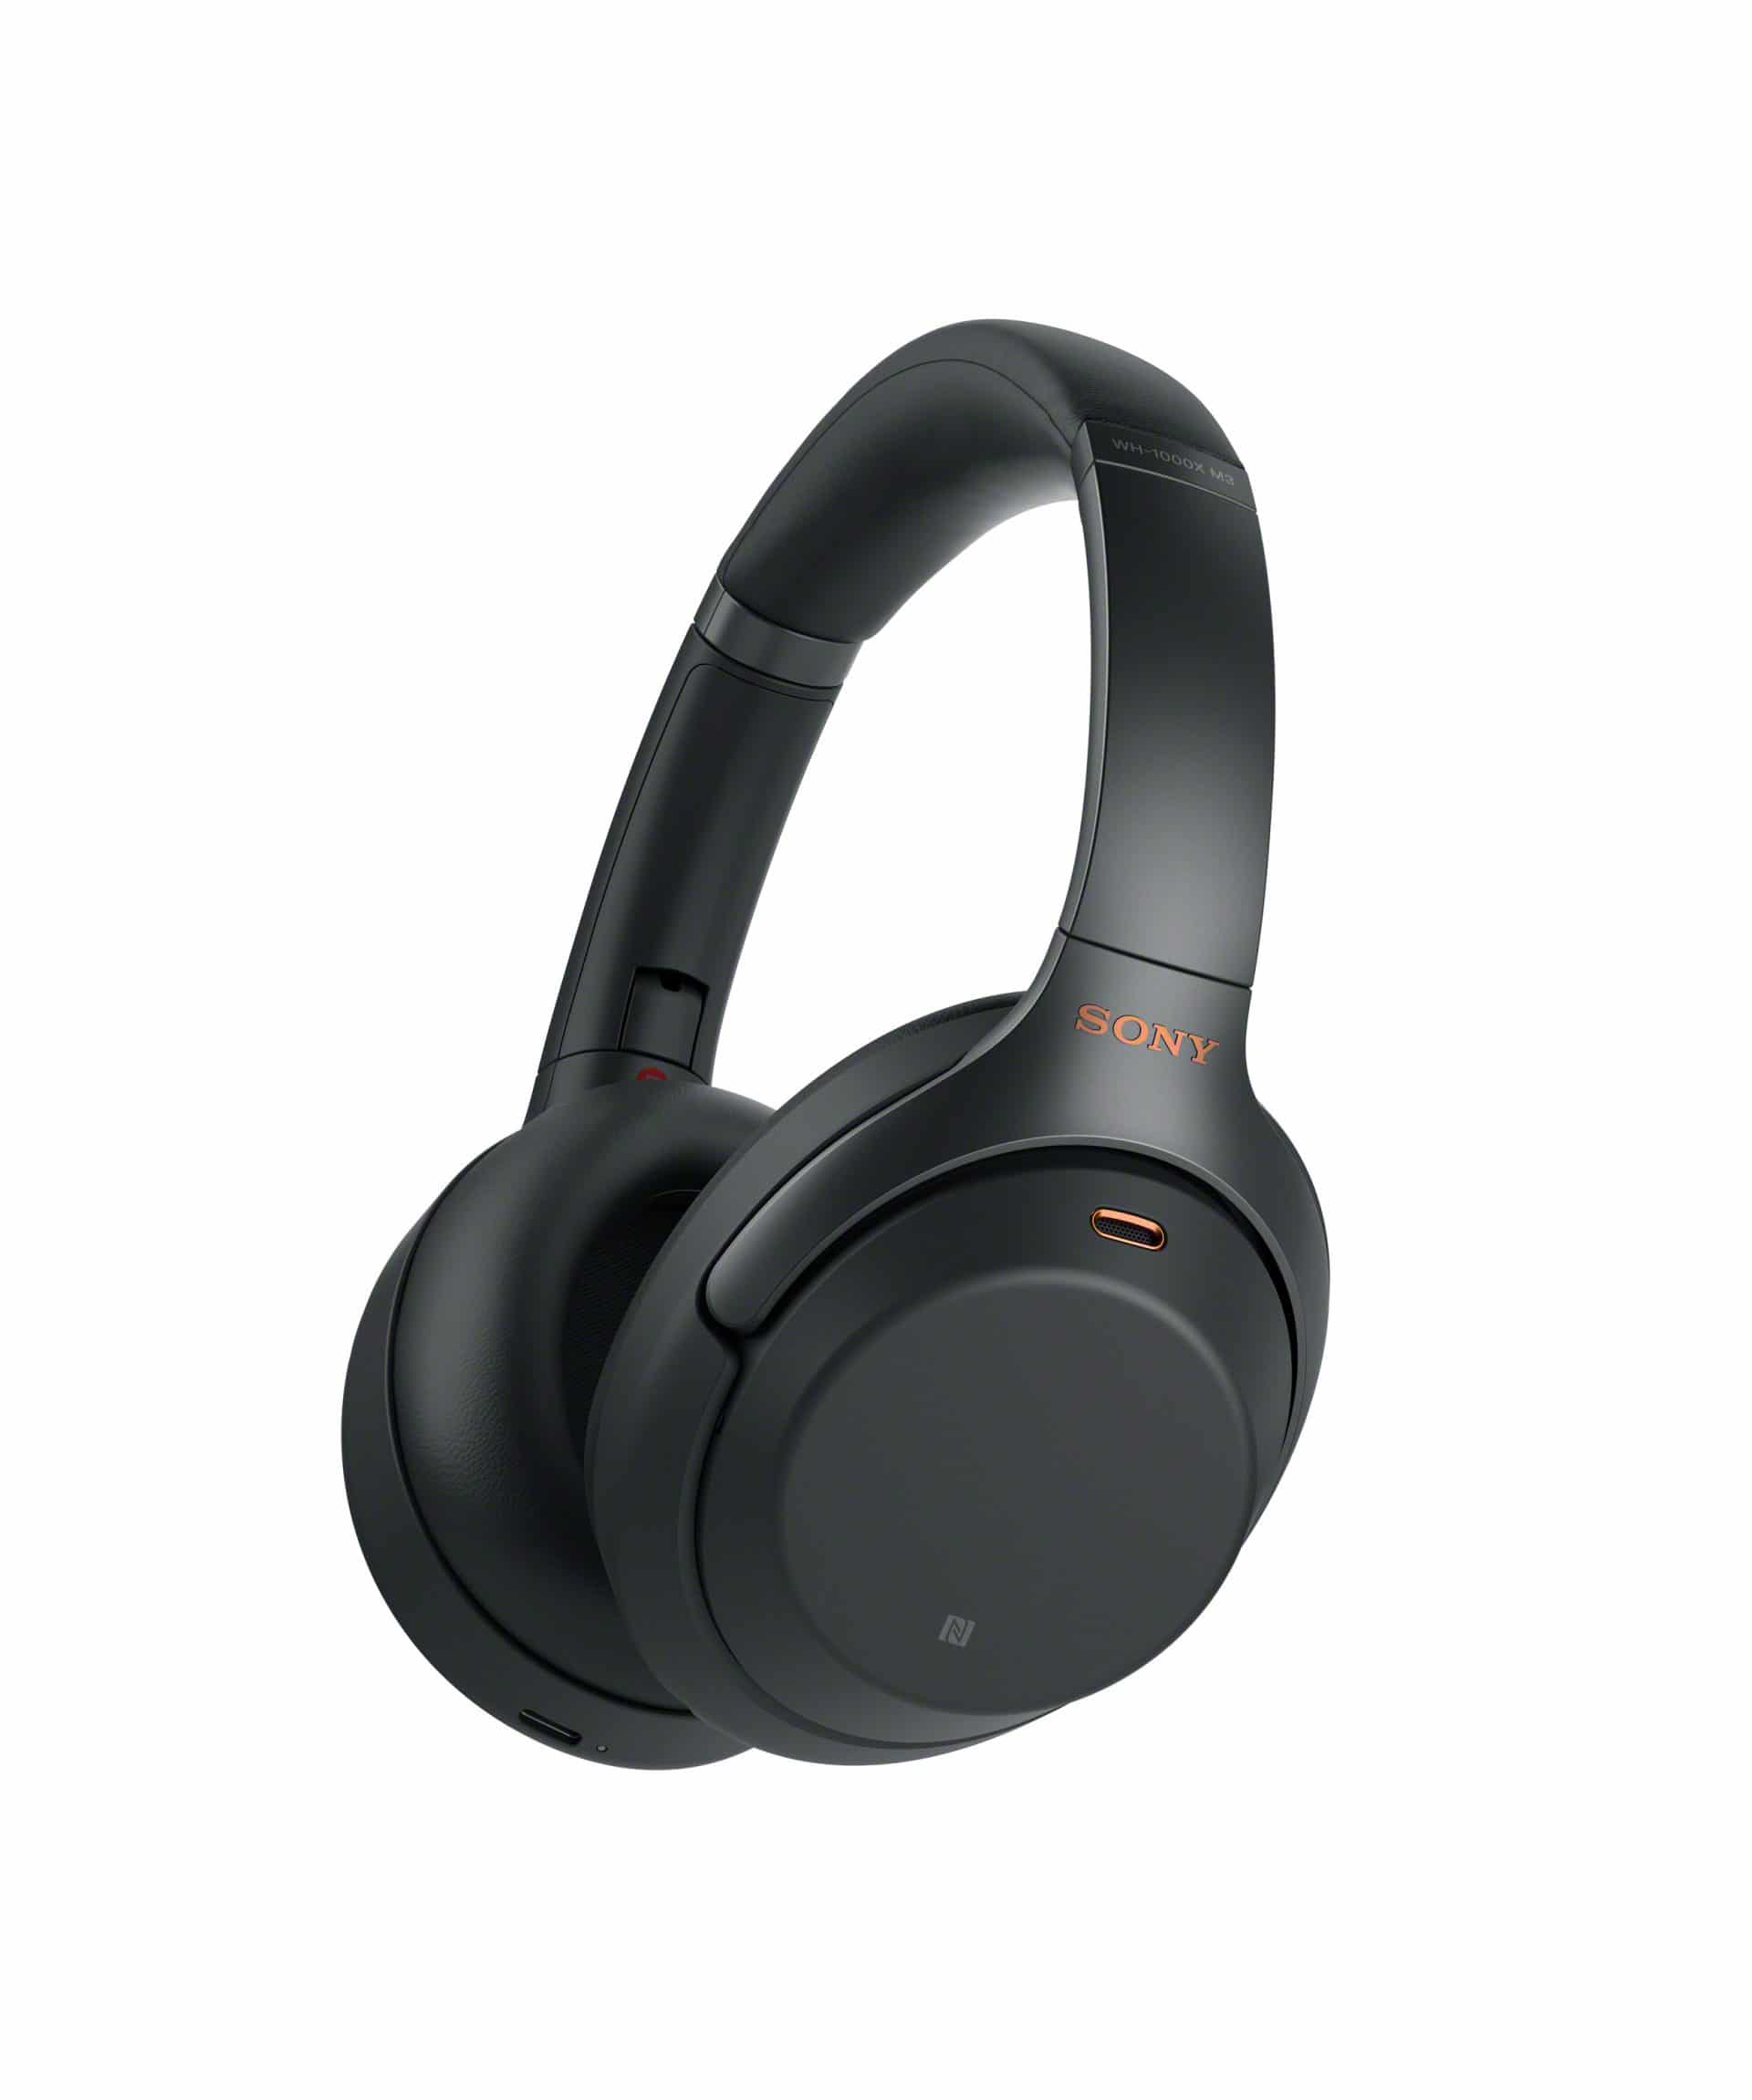 Sony Noise Canceling Headphones black